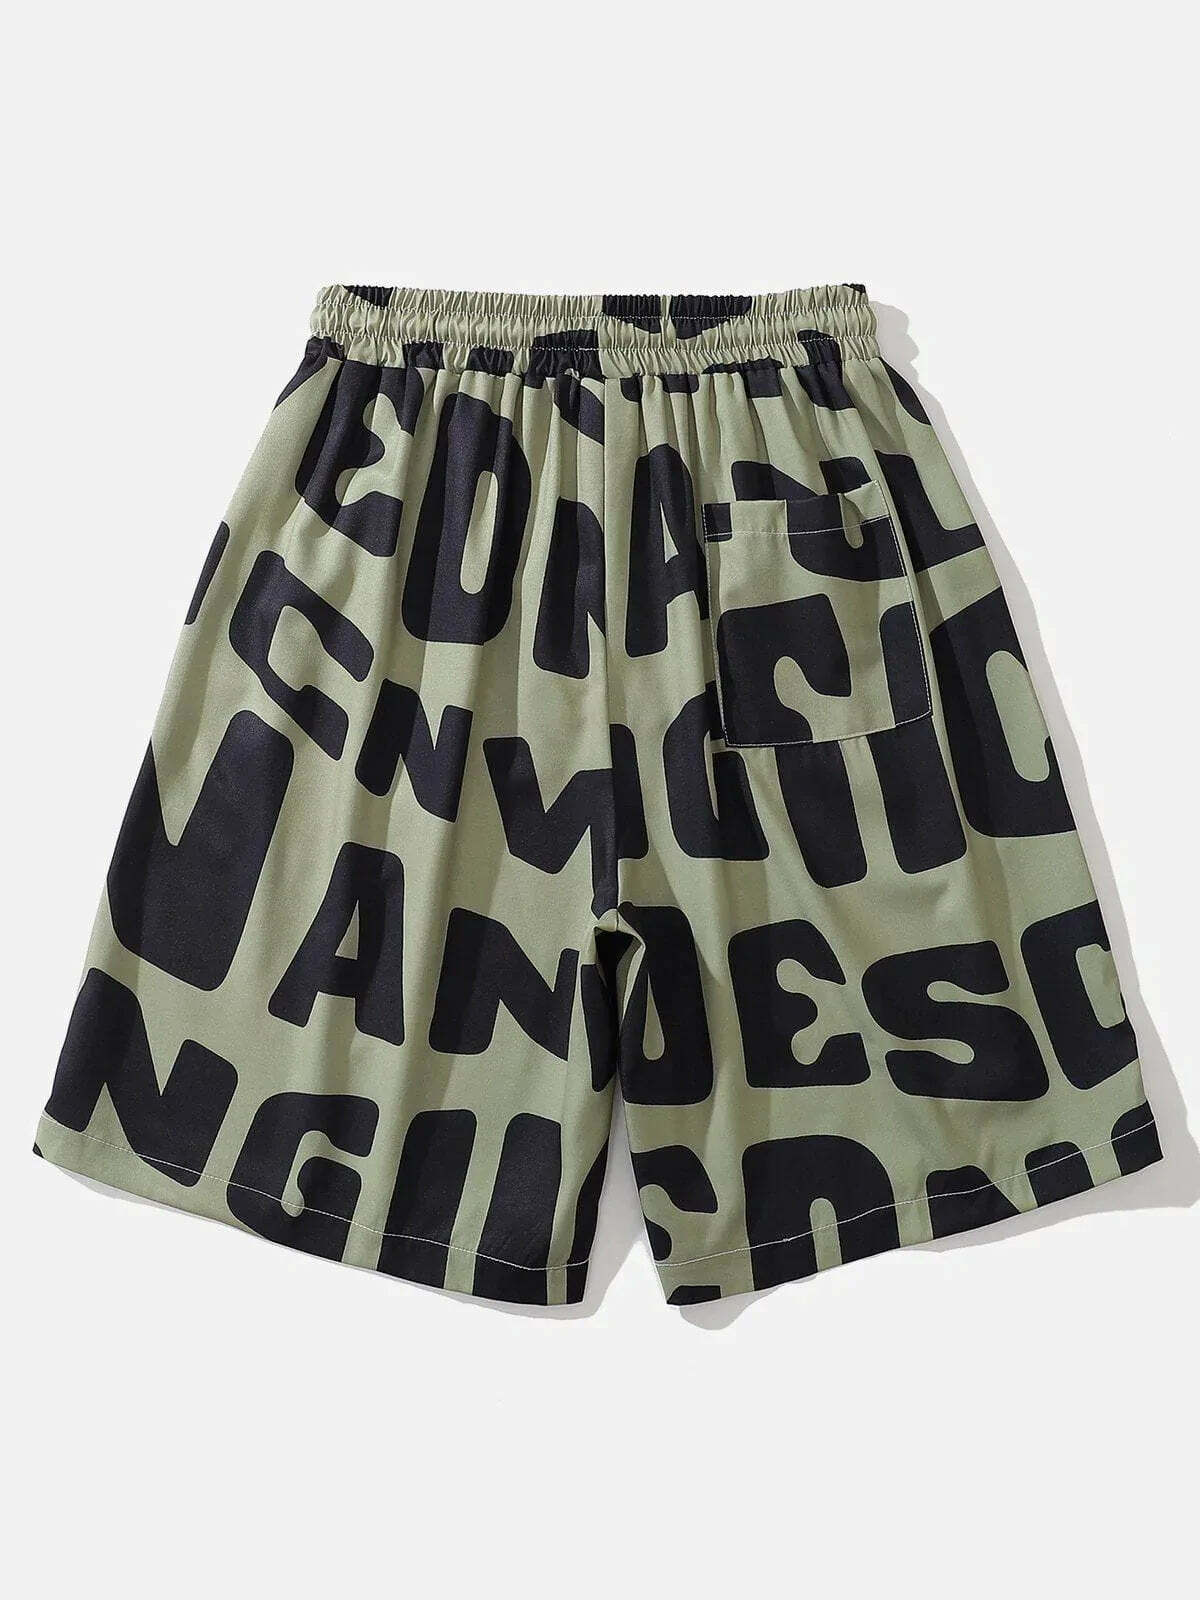 printed graffiti denim shorts edgy streetwear essential 8792